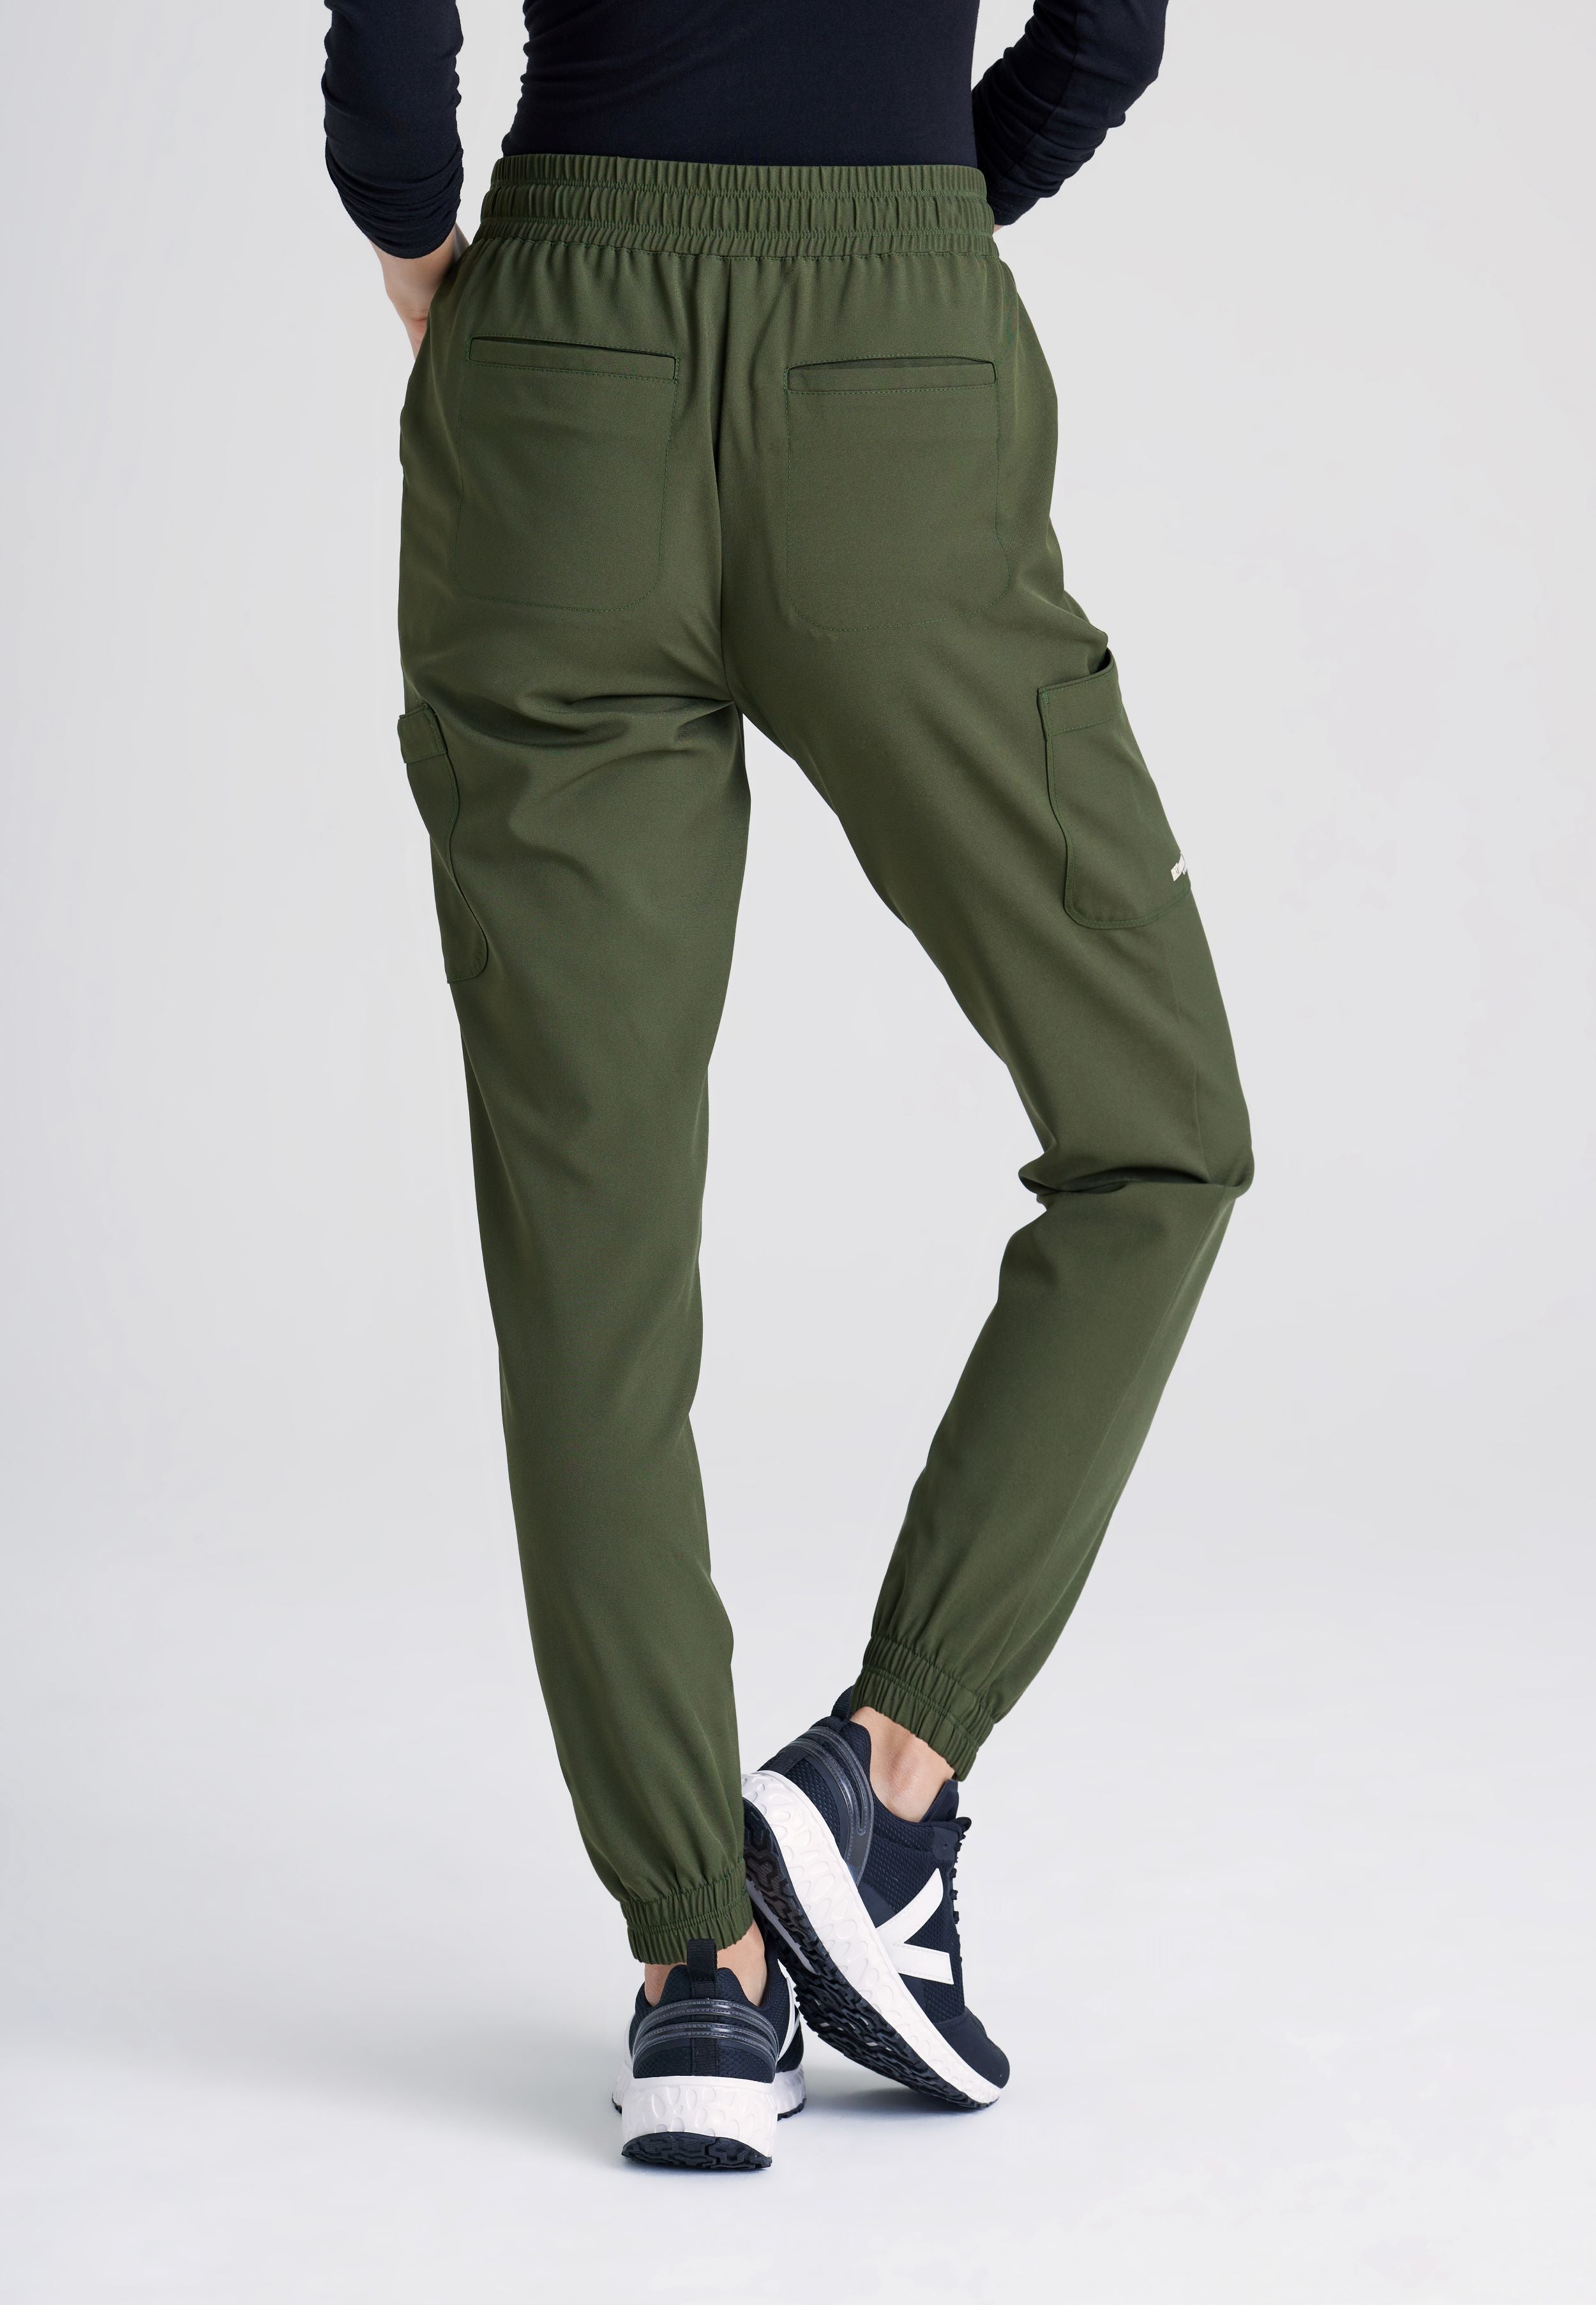 Men's Brand New George Elastic Waist Cargo Jogger Pants (various sizes) |  eBay